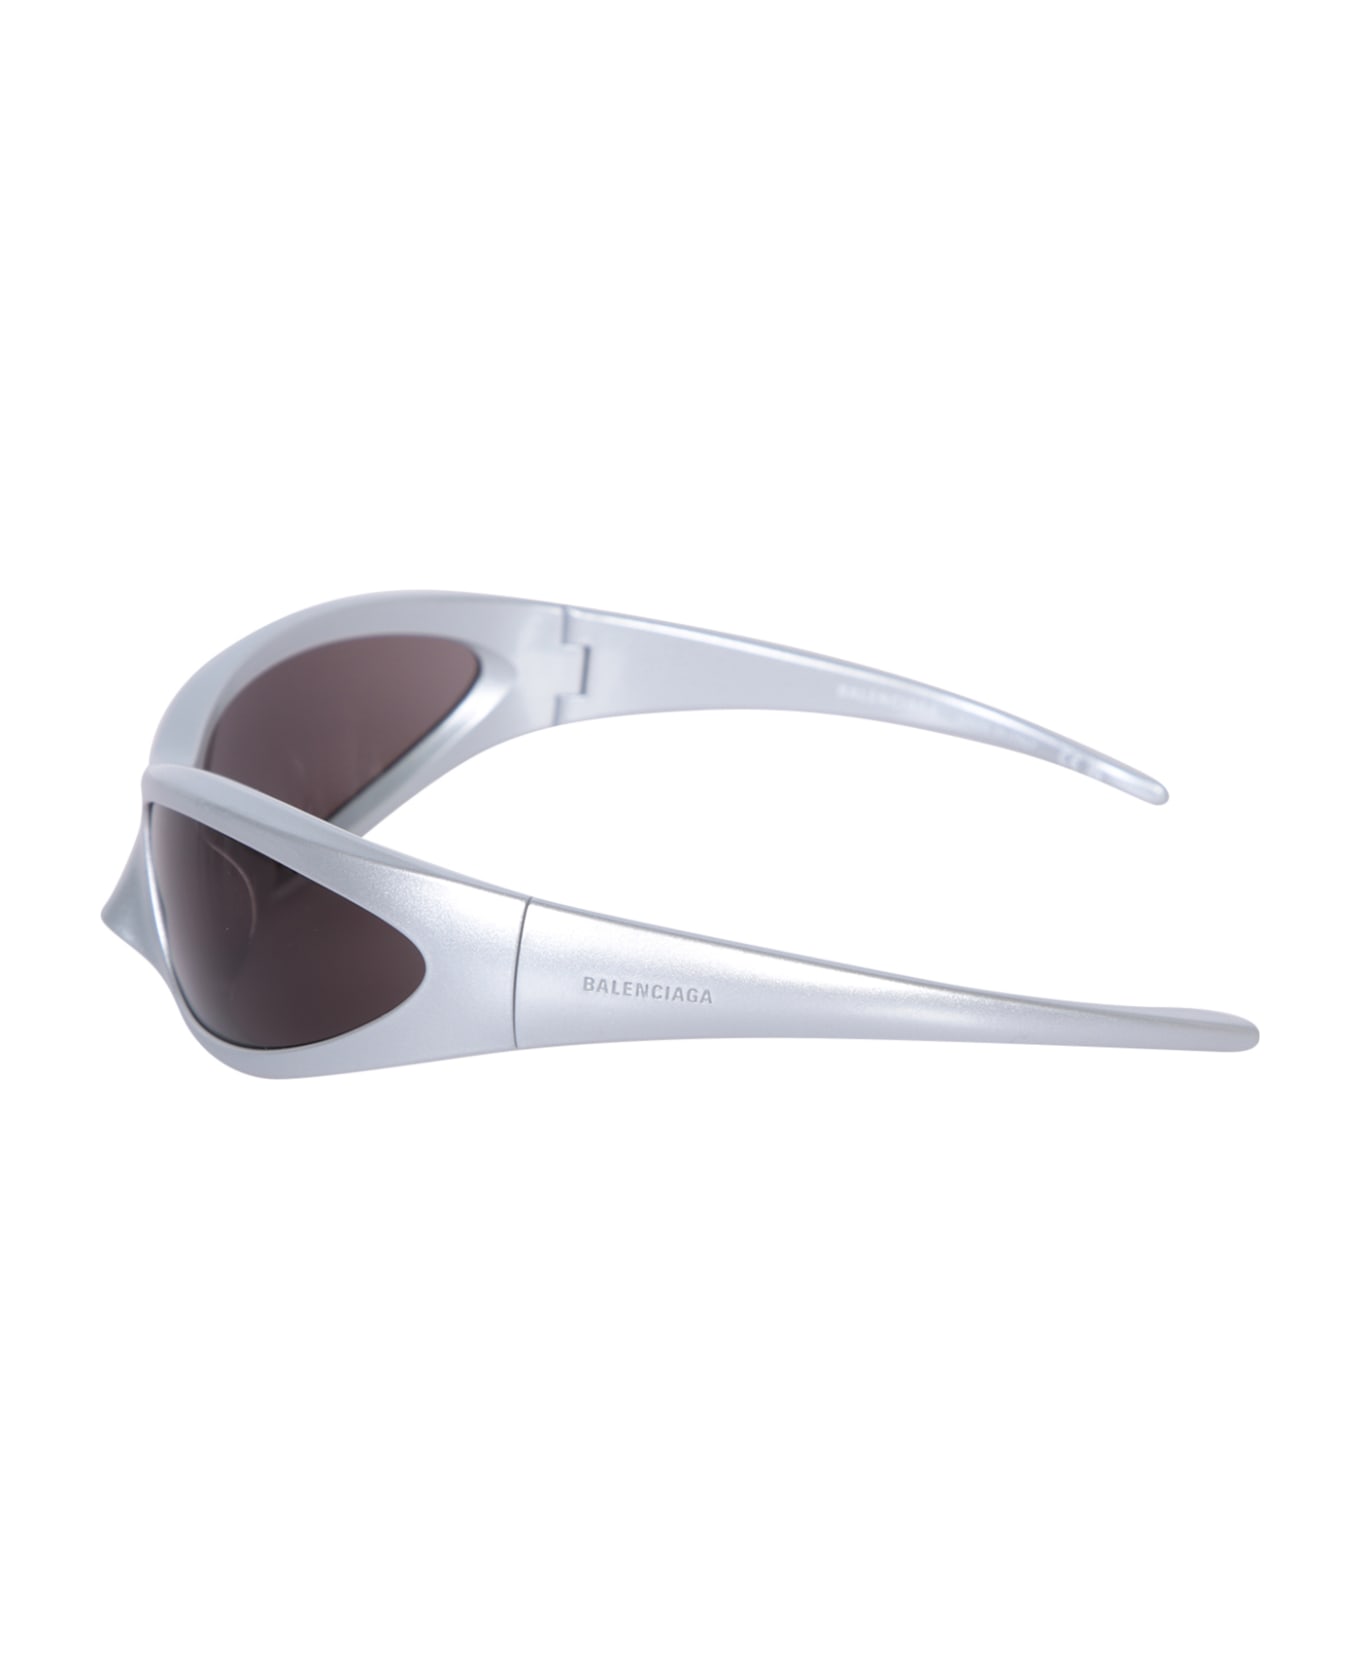 Balenciaga Skin Cat Silver Sunglasses - Metallic